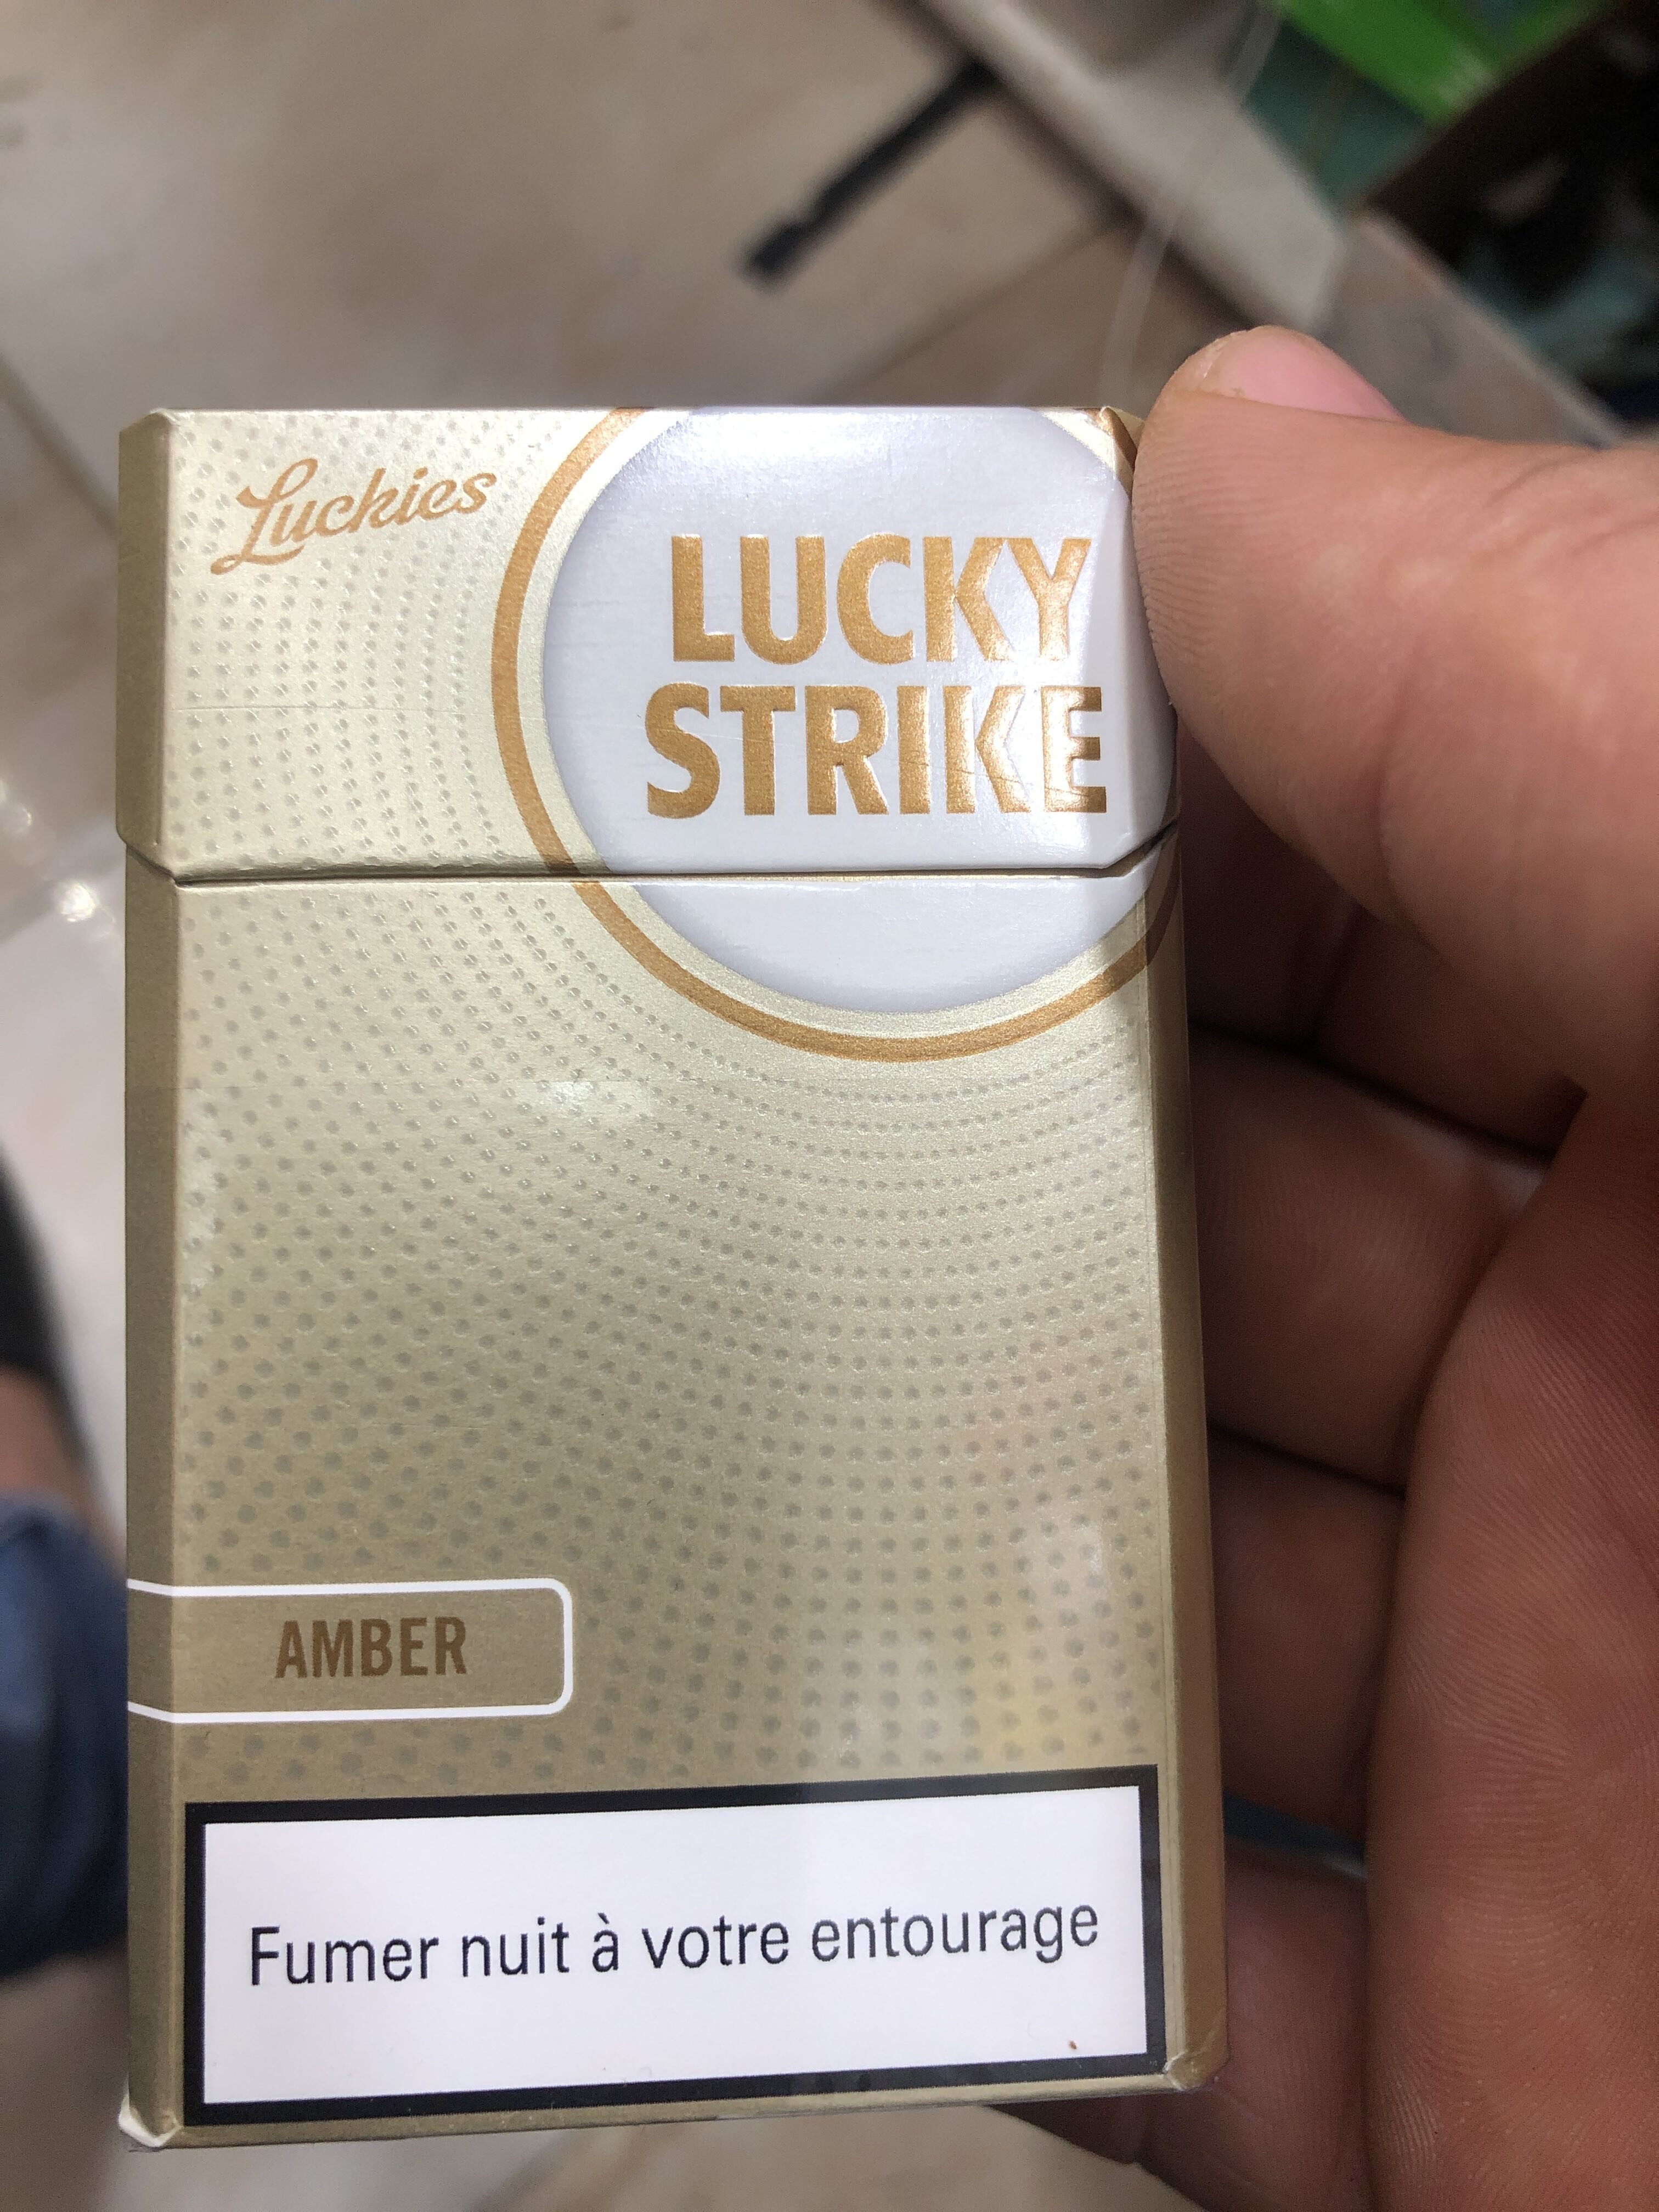 lucky strike - Produkt - en